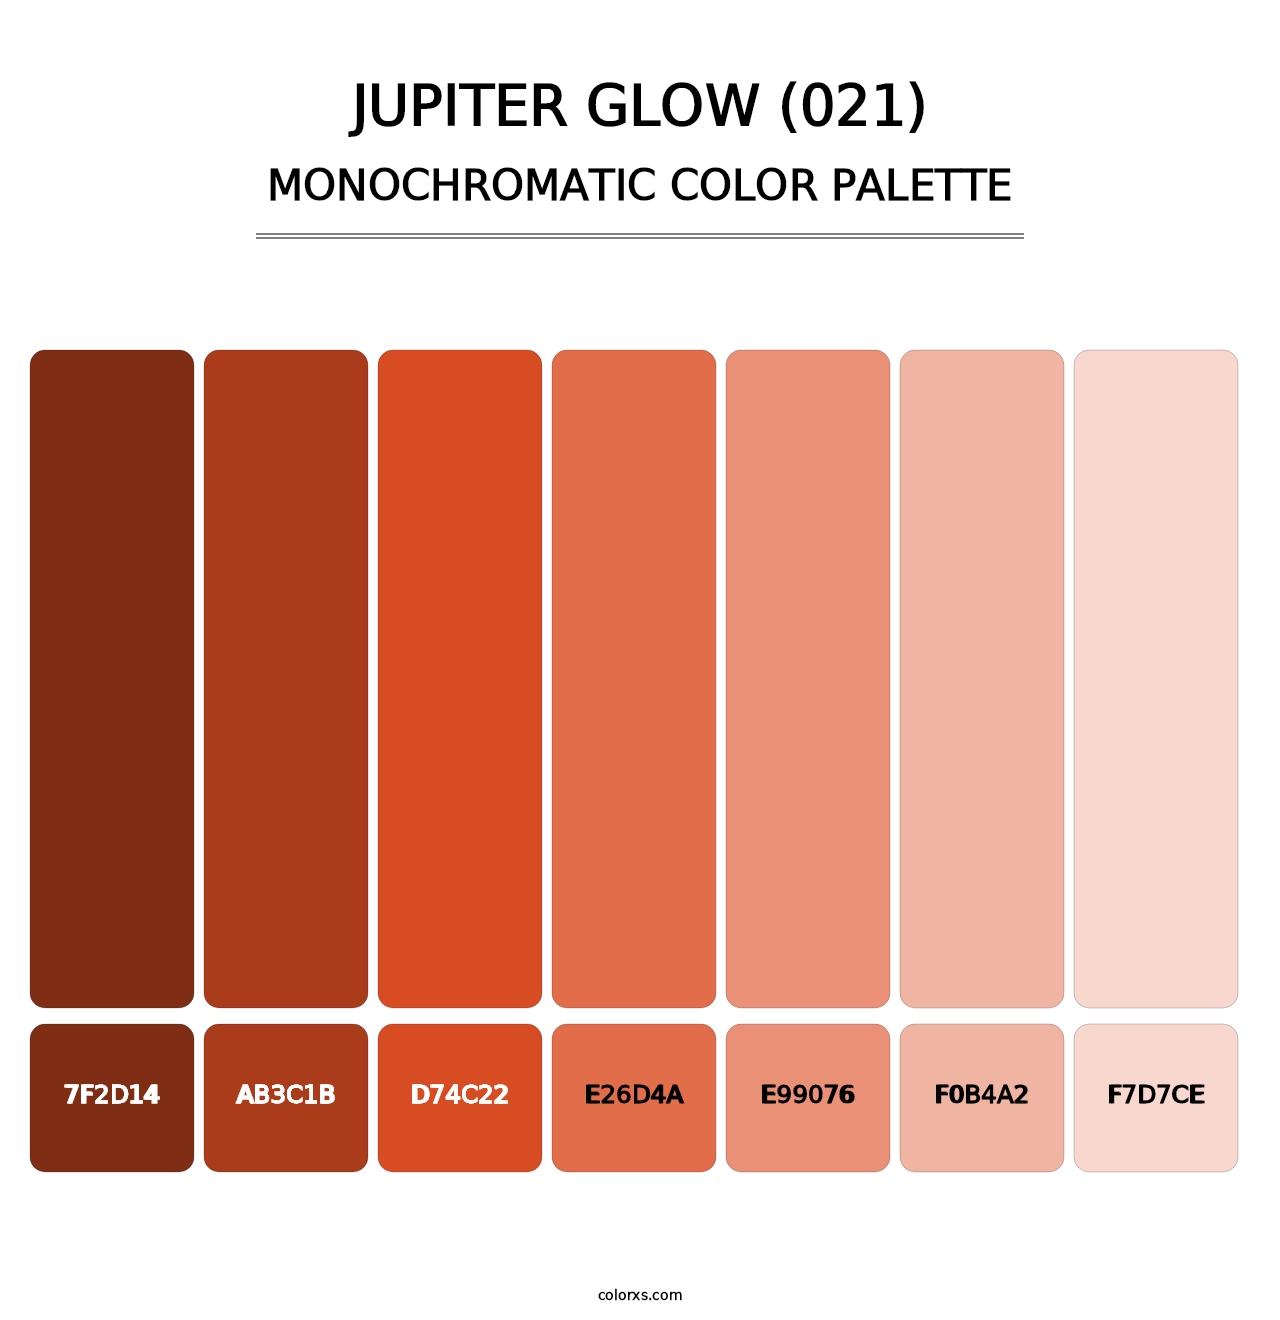 Jupiter Glow (021) - Monochromatic Color Palette